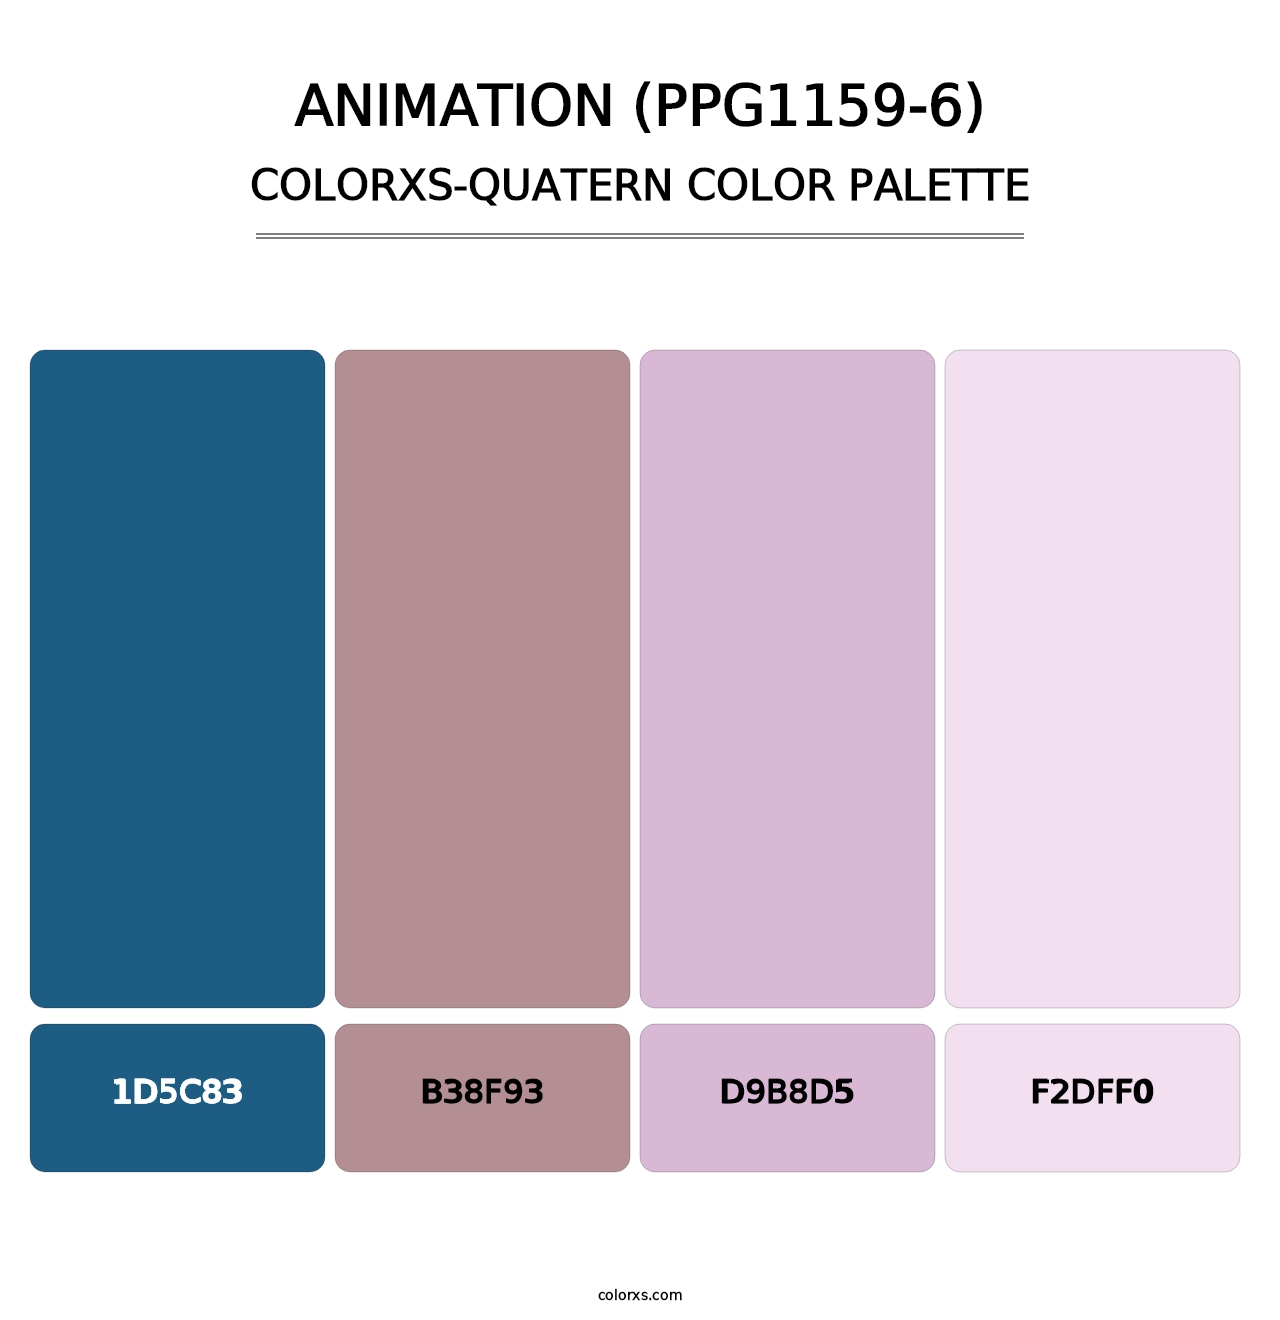 Animation (PPG1159-6) - Colorxs Quatern Palette